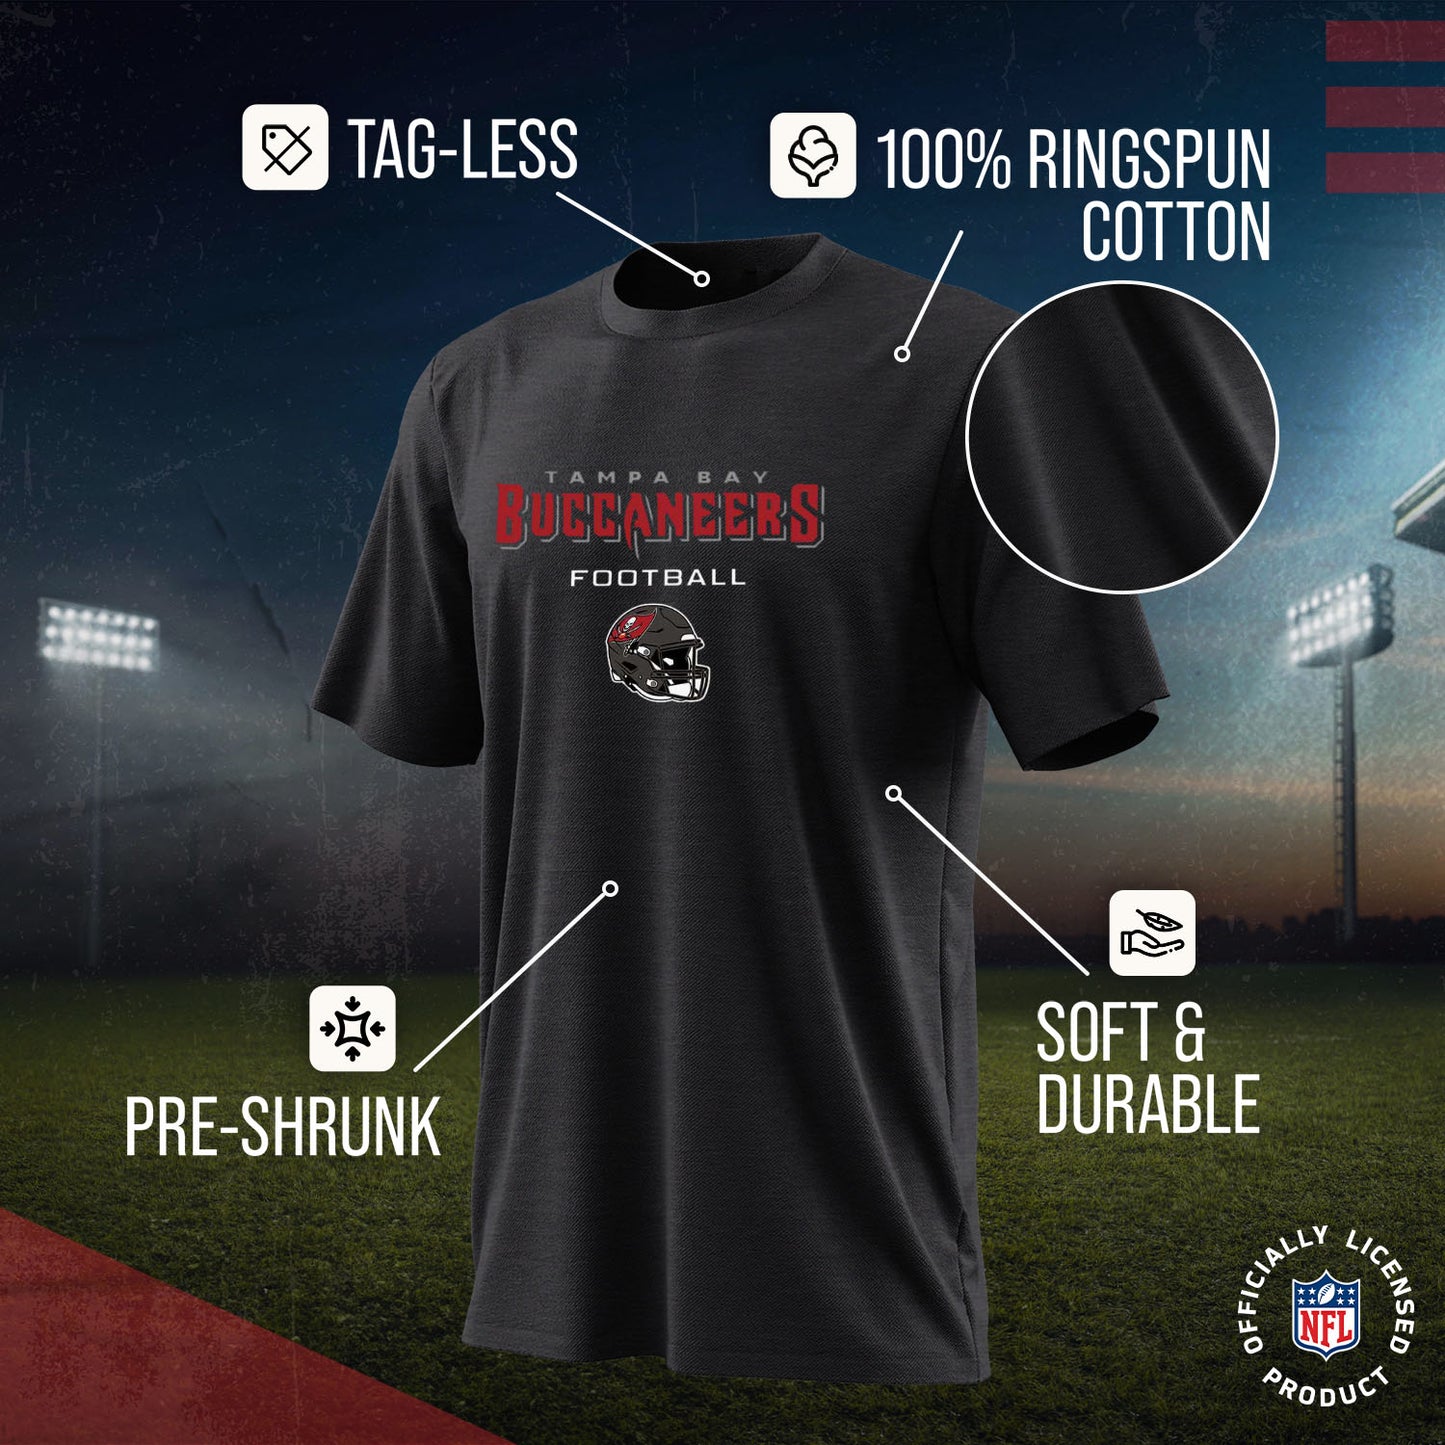 Tampa Bay Buccaneers NFL Adult Football Helmet Tagless T-Shirt - Charcoal